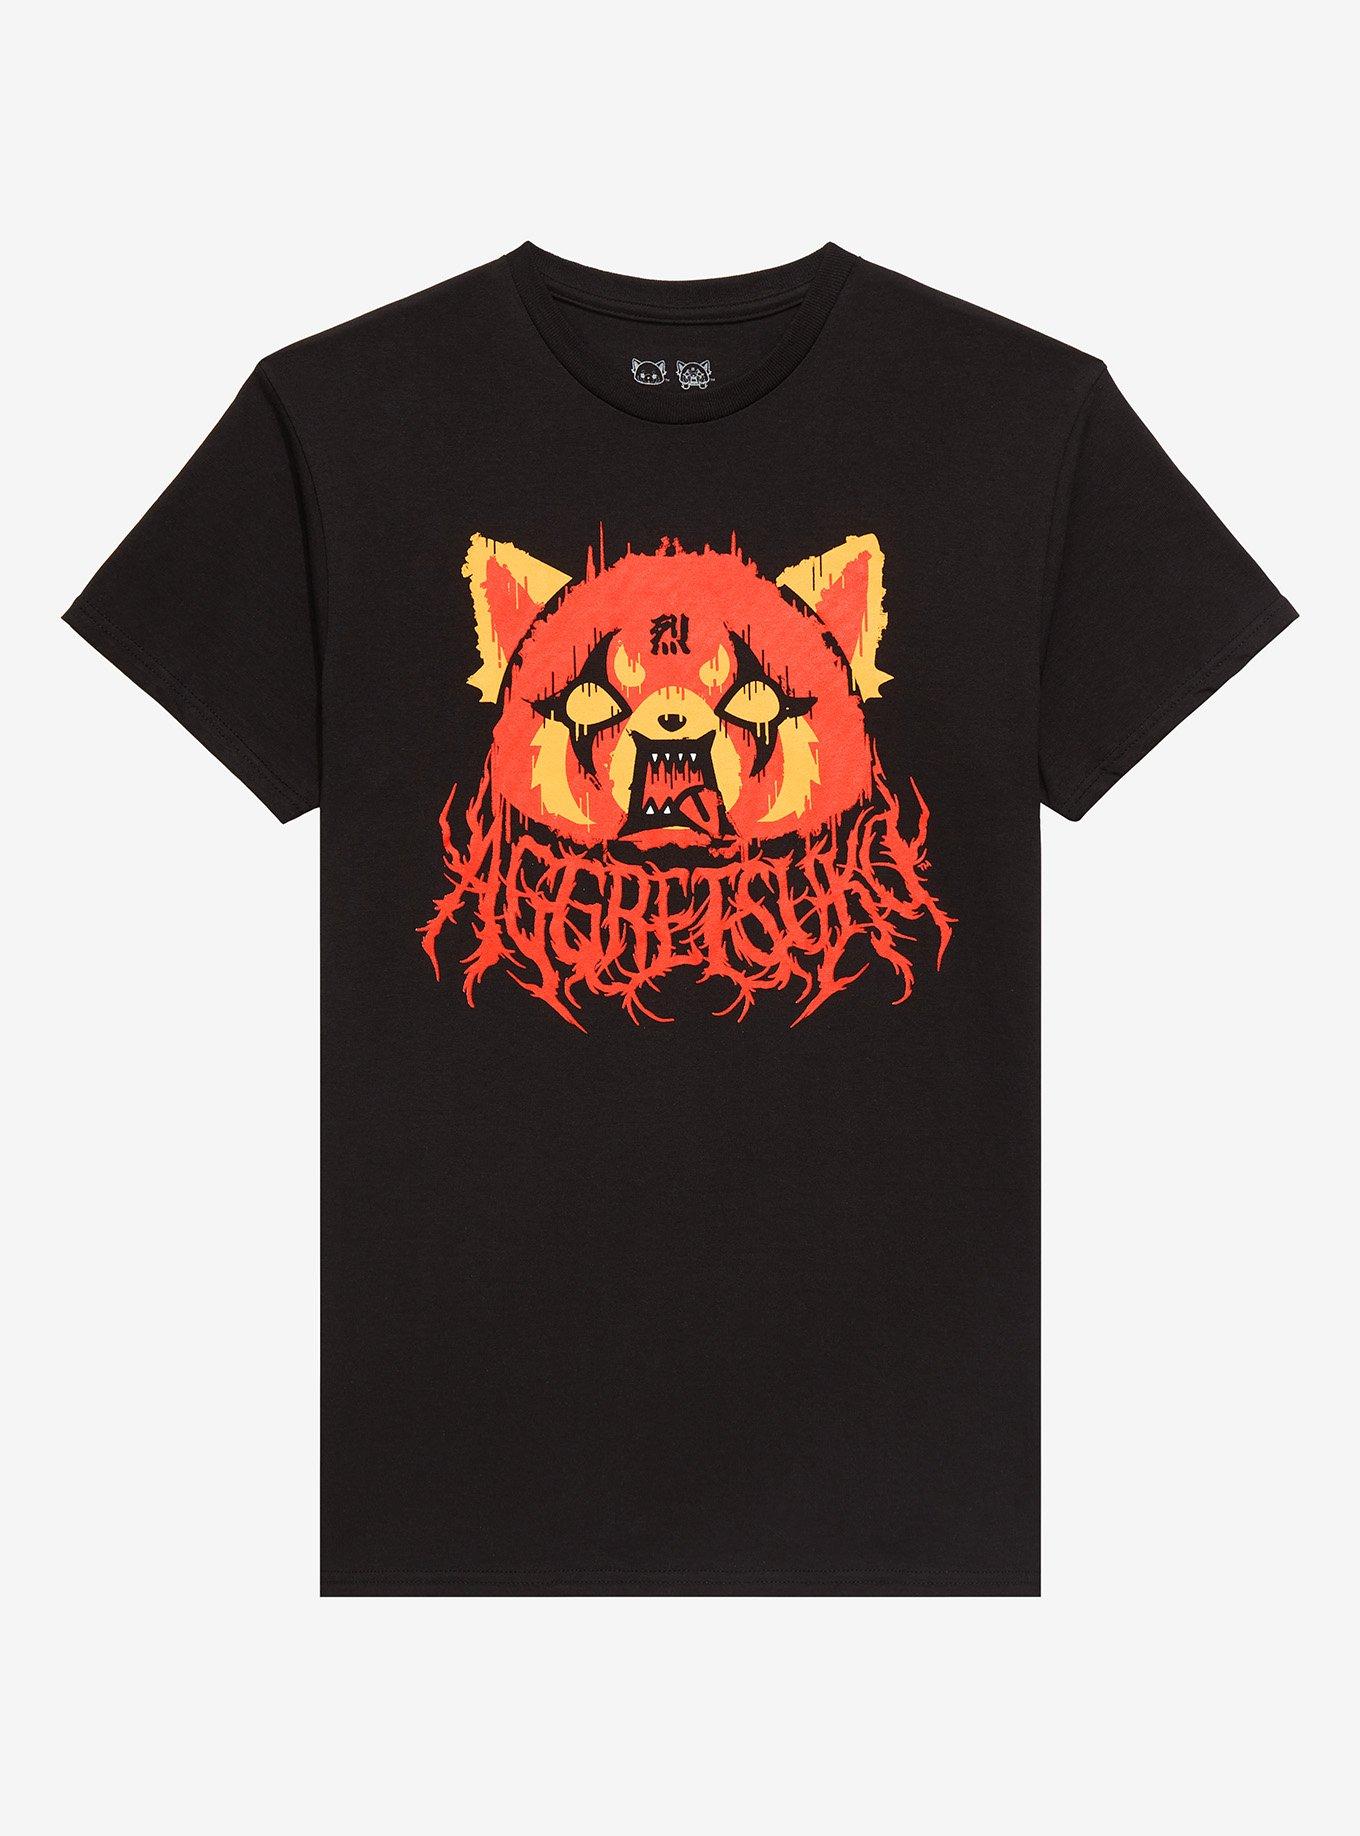 Aggretsuko Rage T-Shirt, BLACK, hi-res